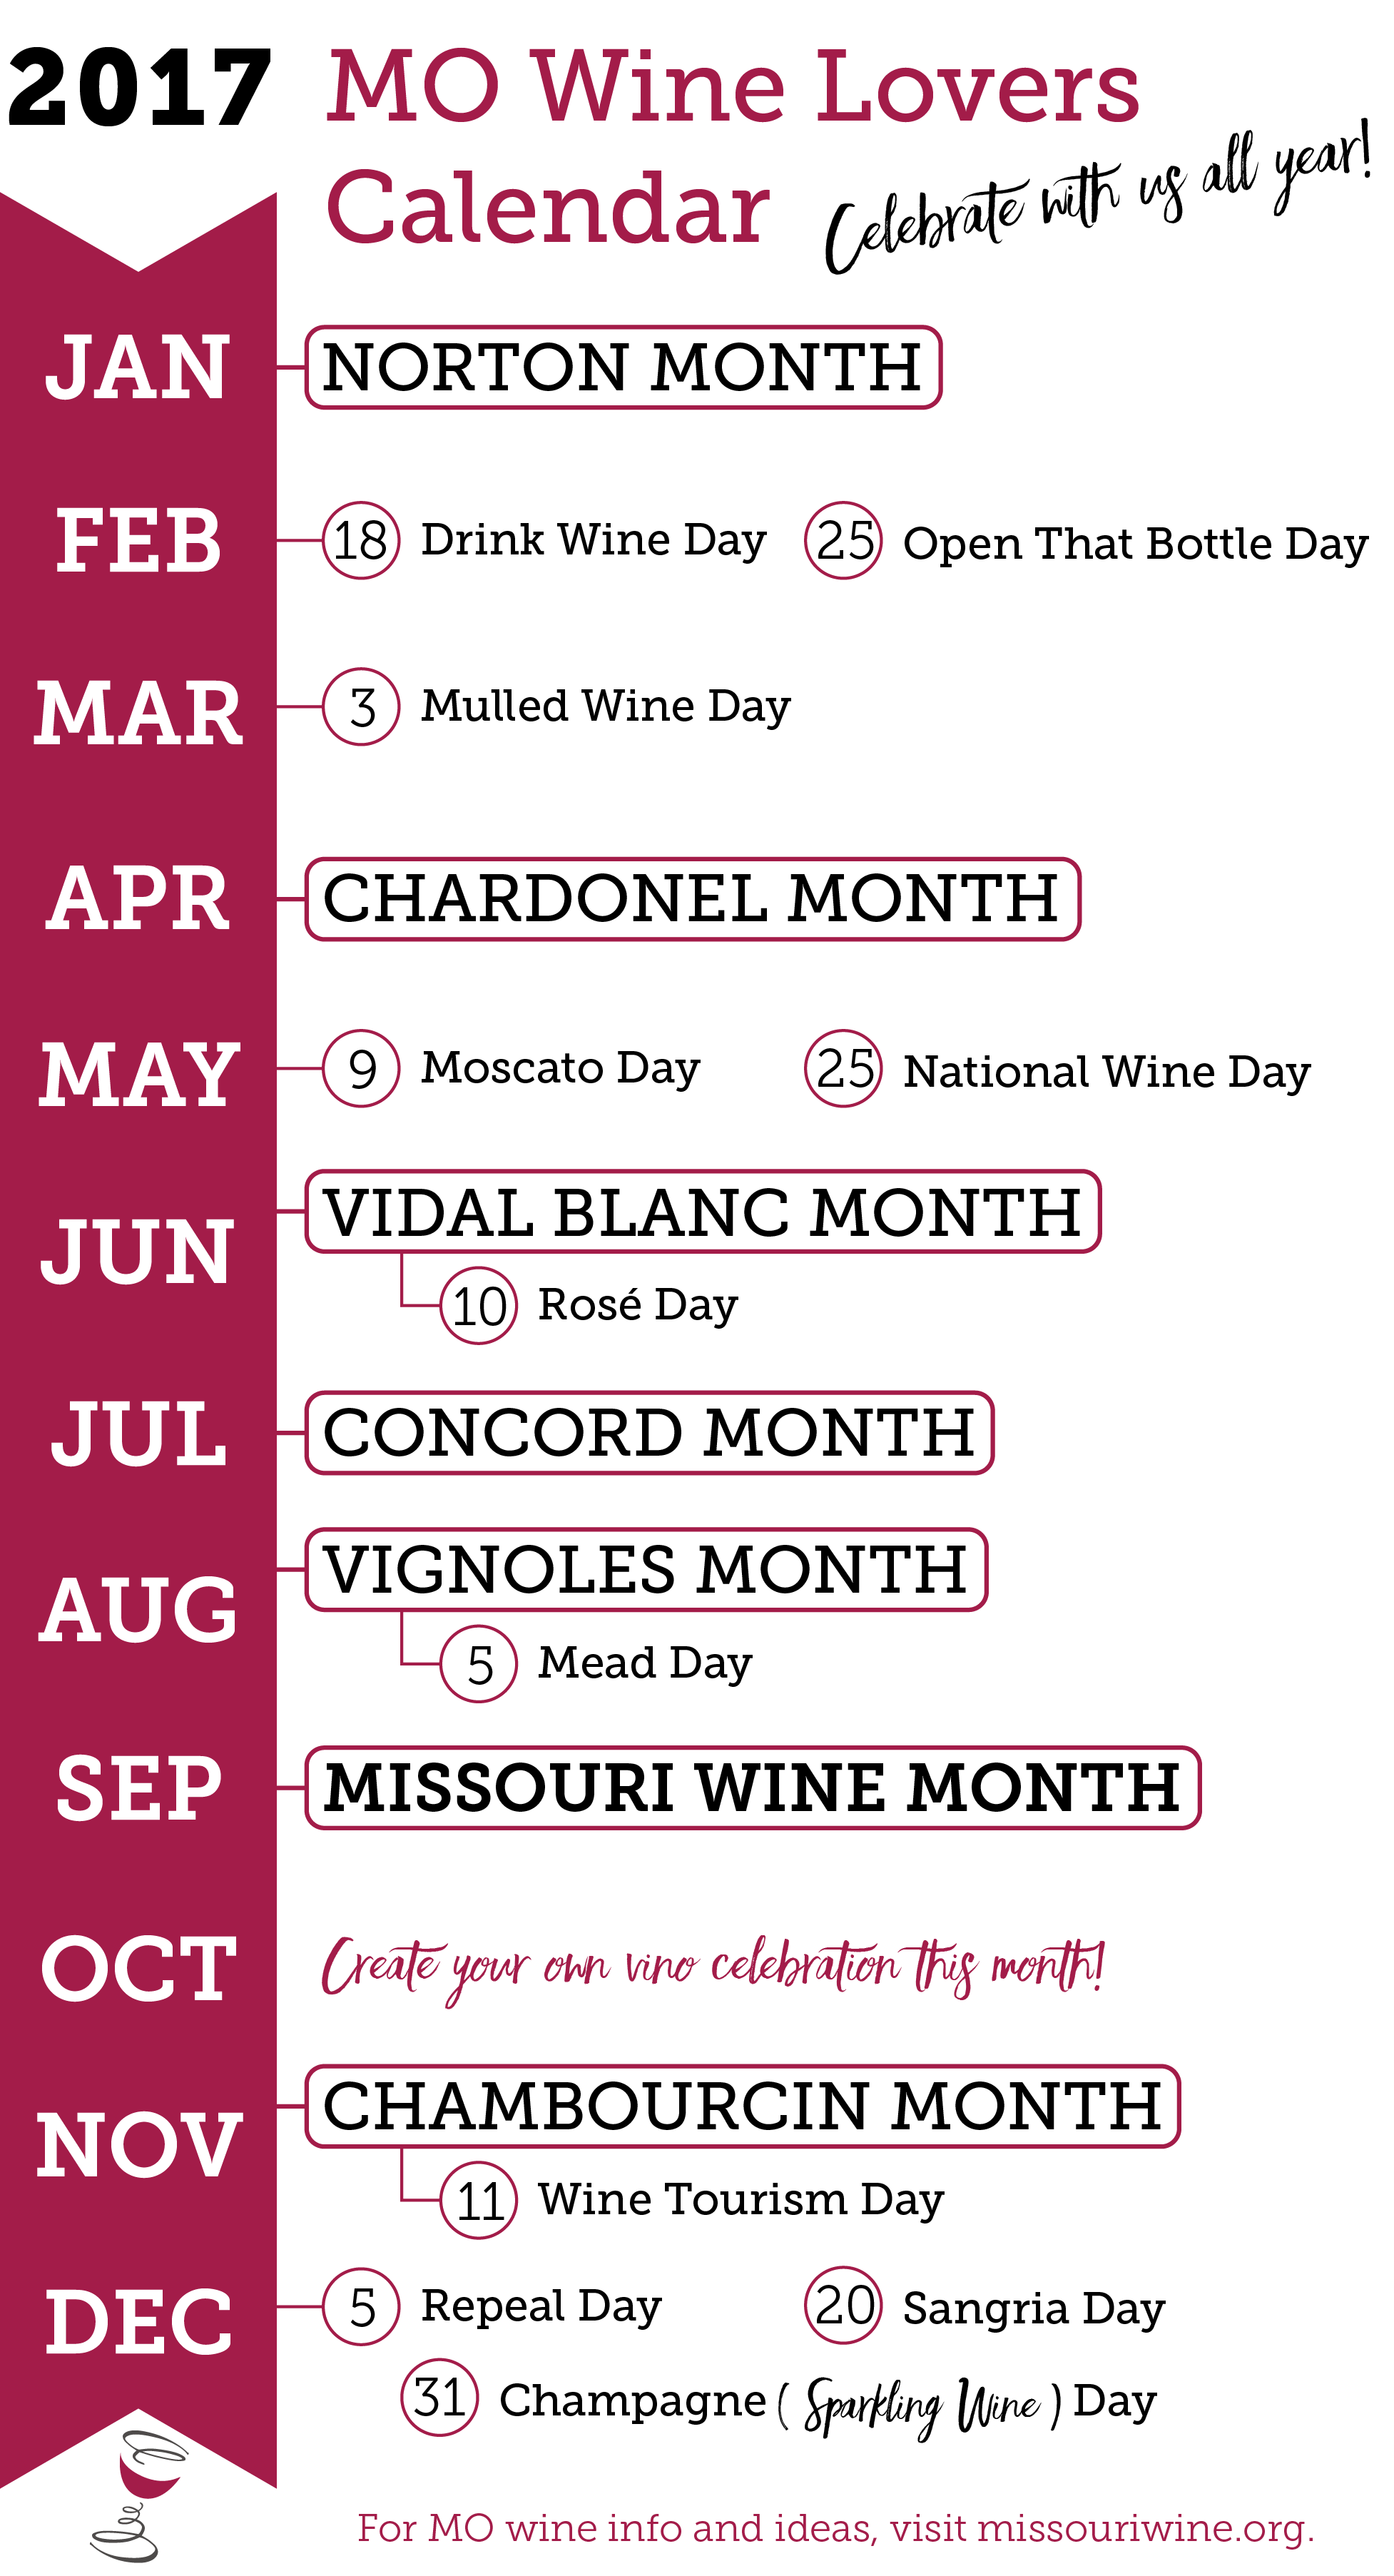 2017 MO Wine Lovers Calendar 